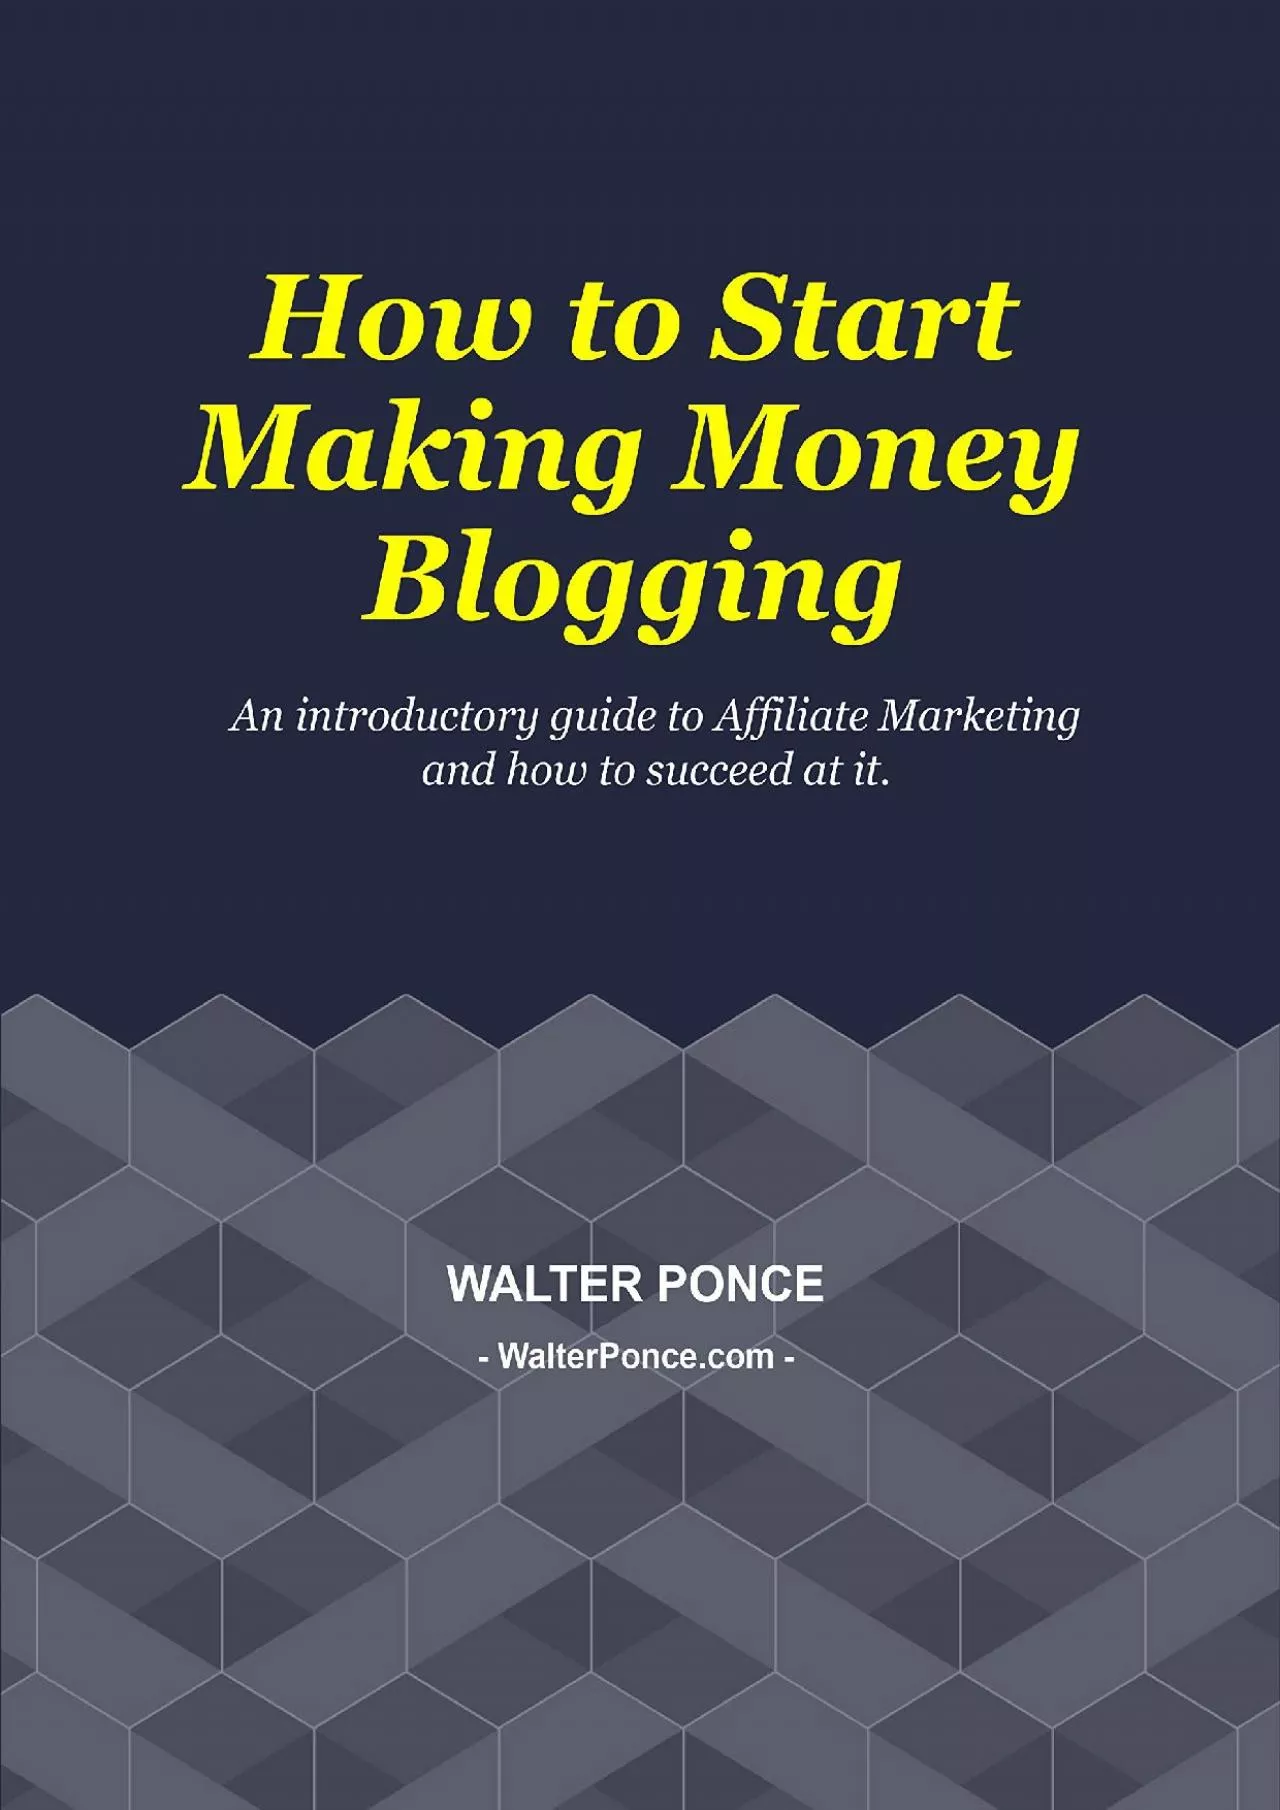 (EBOOK)-How to Start Making Money Blogging (Affiliate Marketing, Amazon Affiliates, Passive